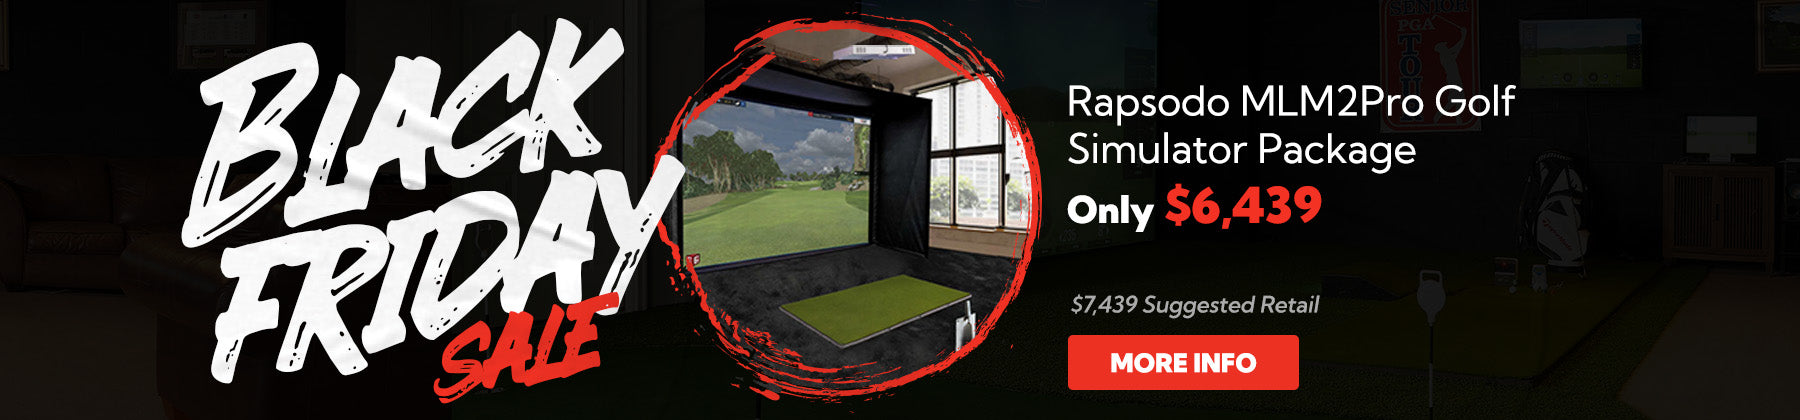 Rapsodo MLM2Pro Golf Simulator Package on sale for $6,439